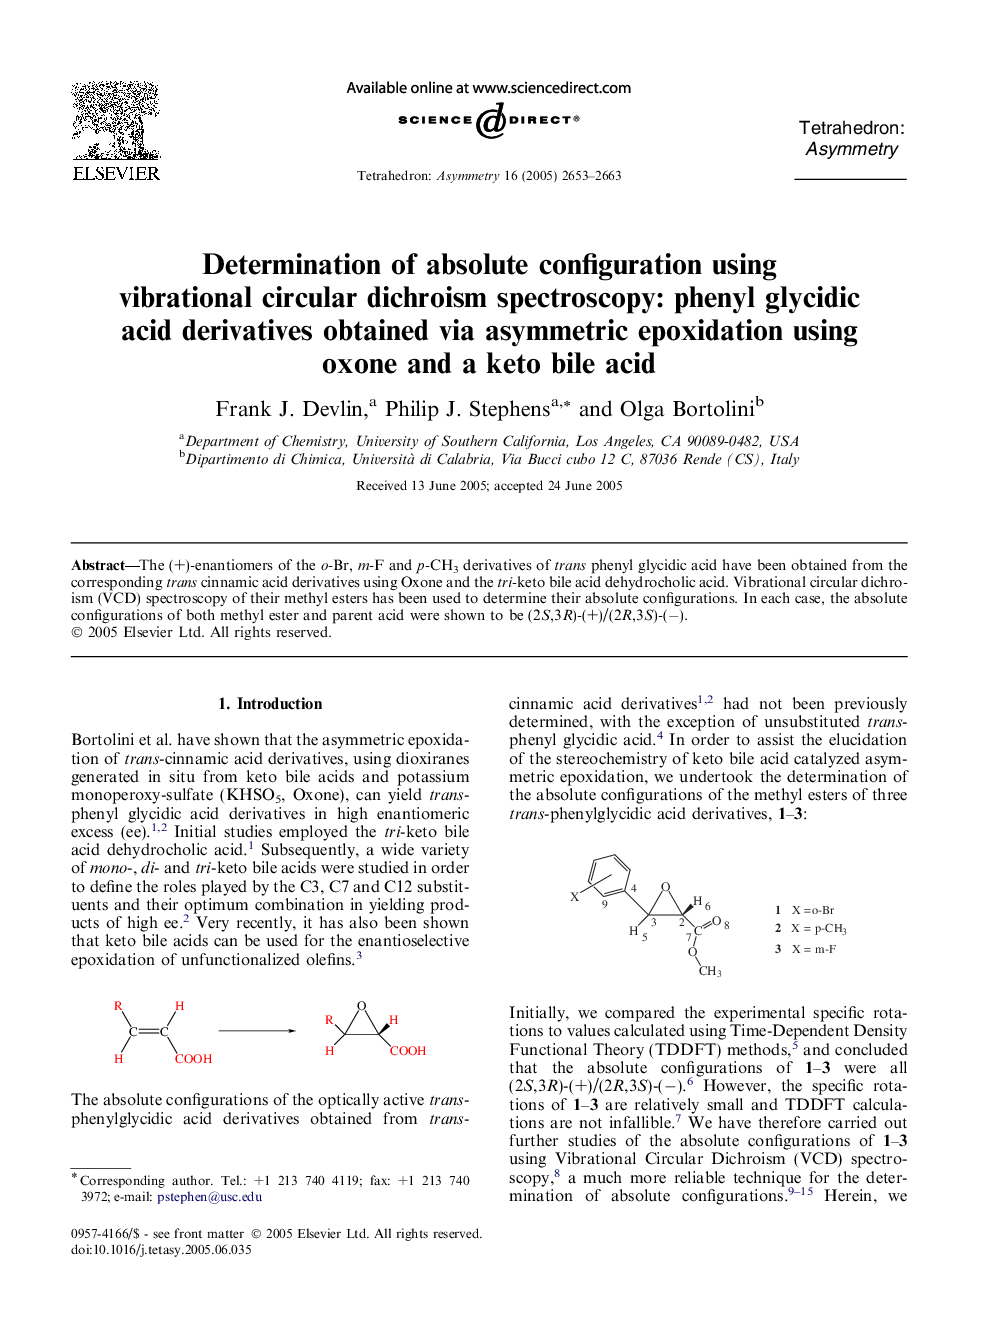 Determination of absolute configuration using vibrational circular dichroism spectroscopy: phenyl glycidic acid derivatives obtained via asymmetric epoxidation using oxone and a keto bile acid